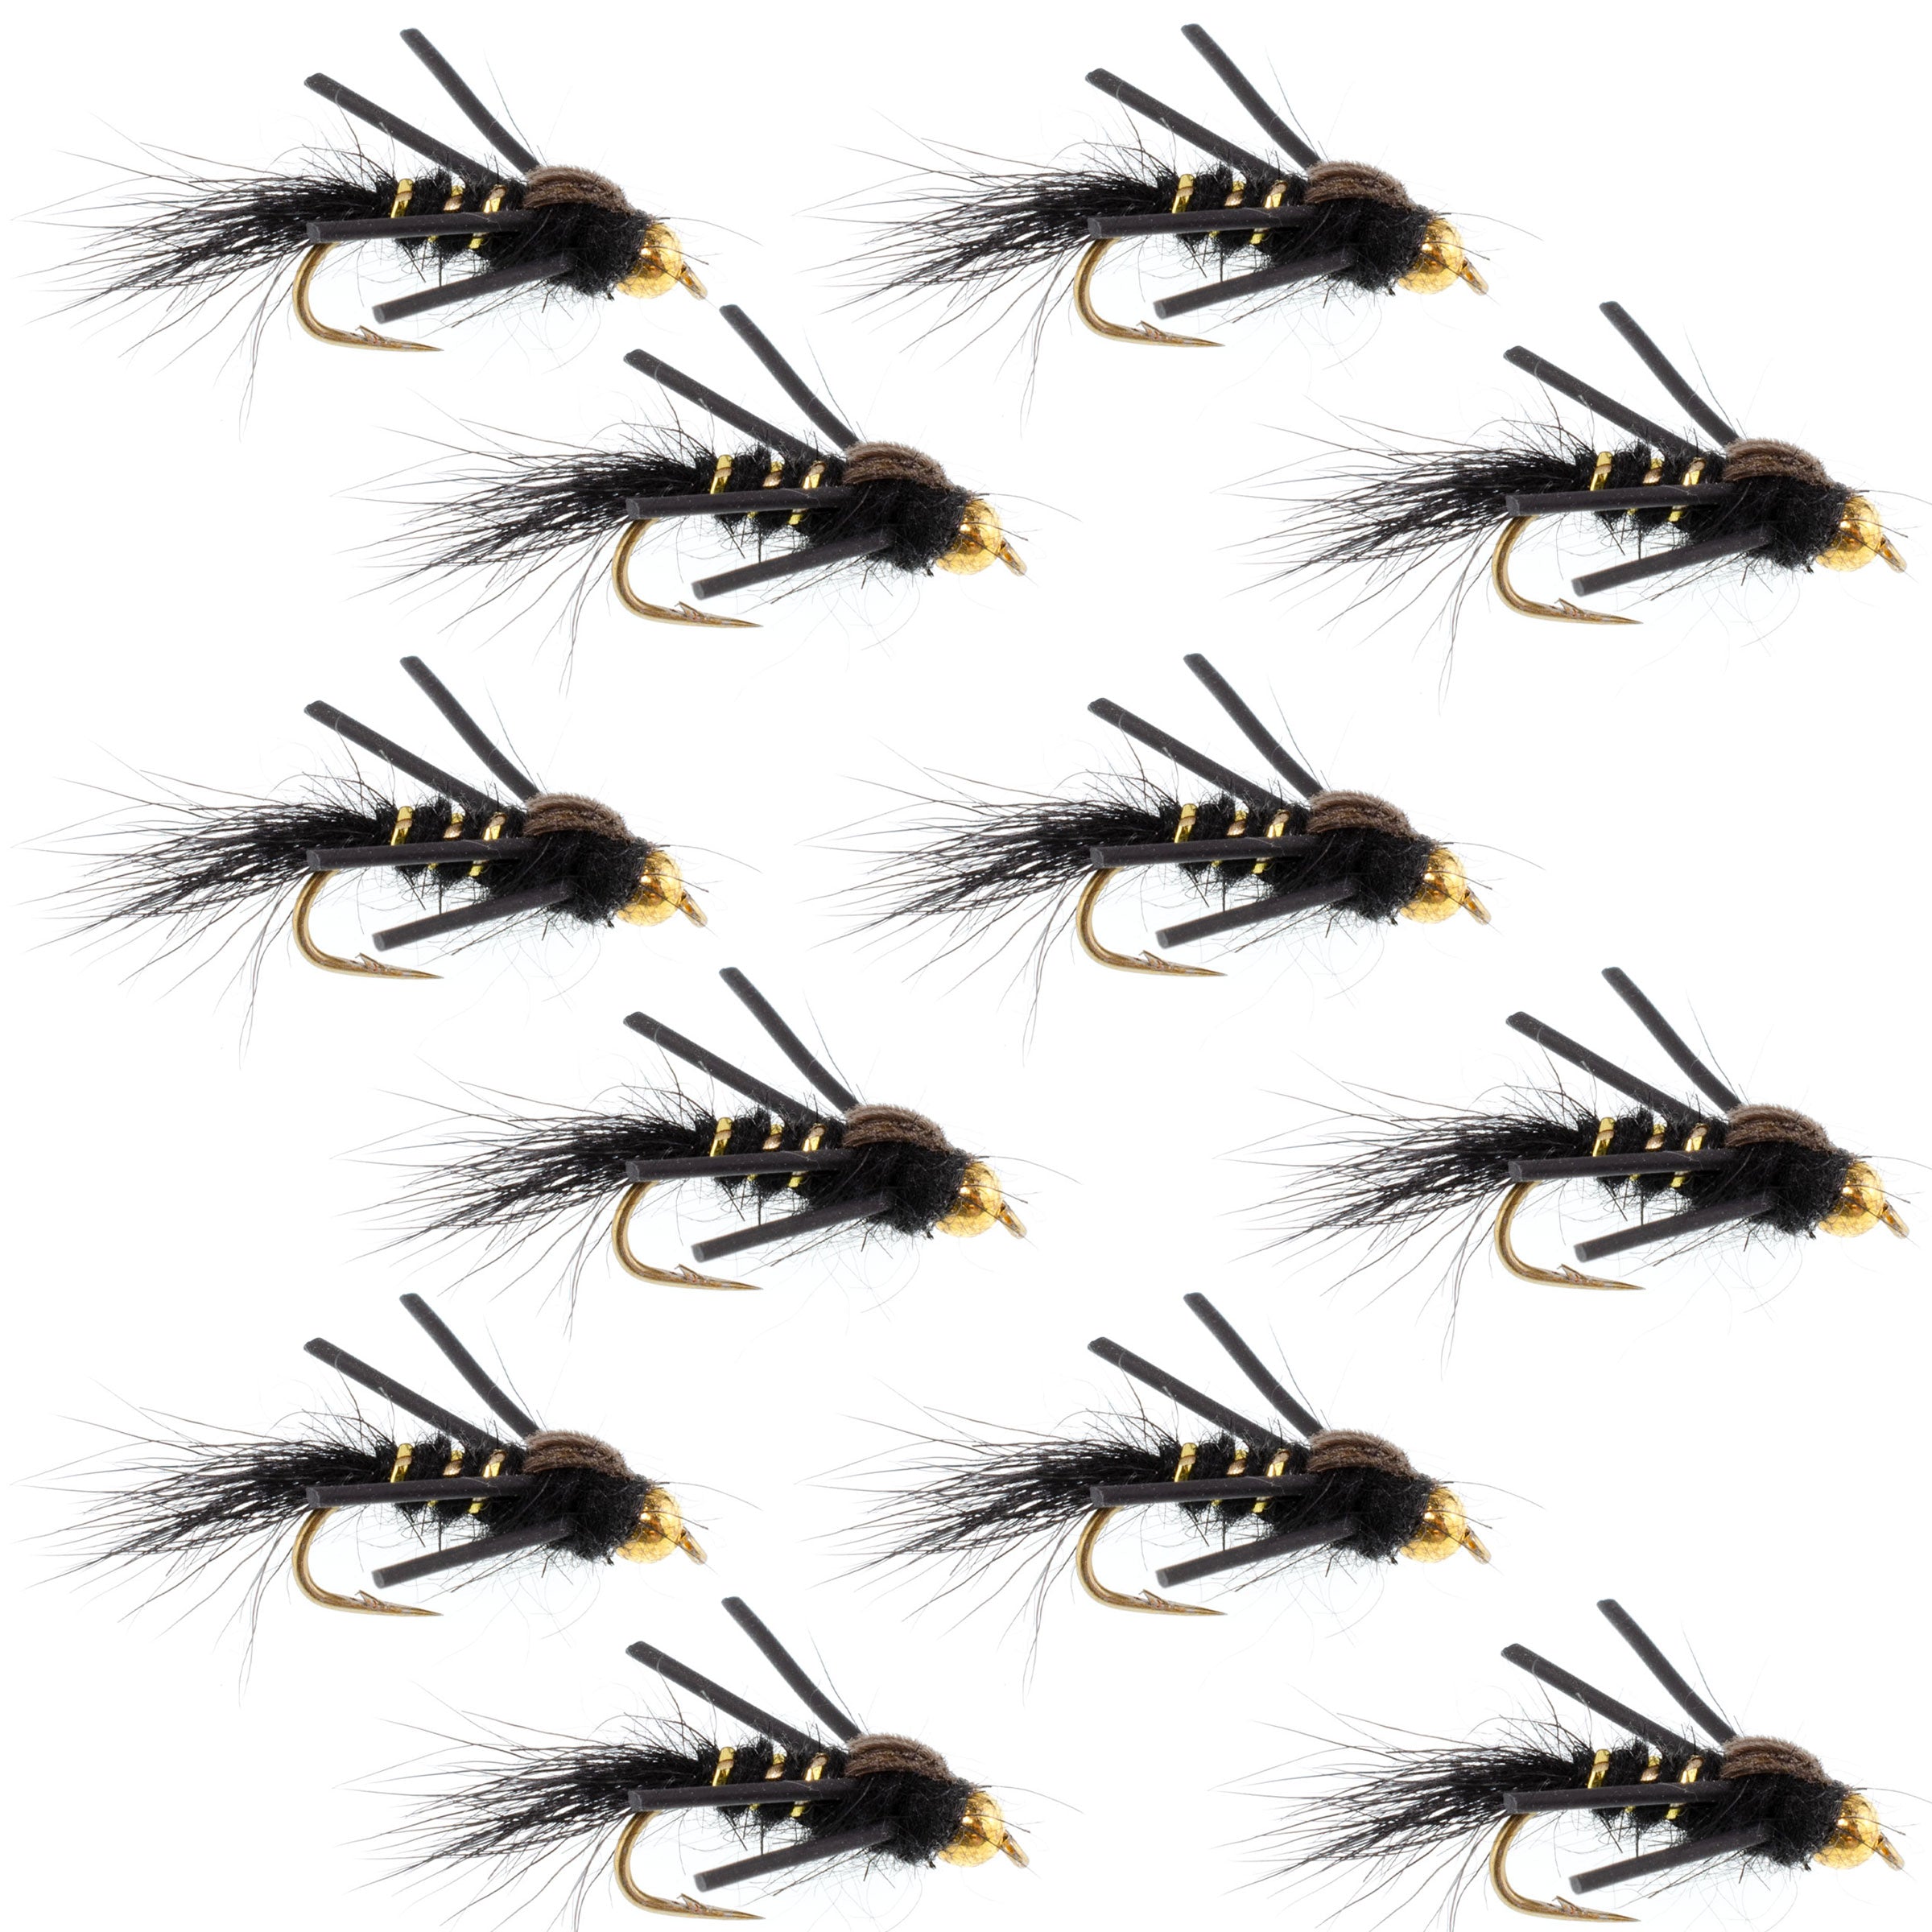 Tungsten Bead Head Rubber Legs Black Gold-Ribbed Hare's Ear Trout Fly Nymph - 1 Dozen Flies Hook Size 14